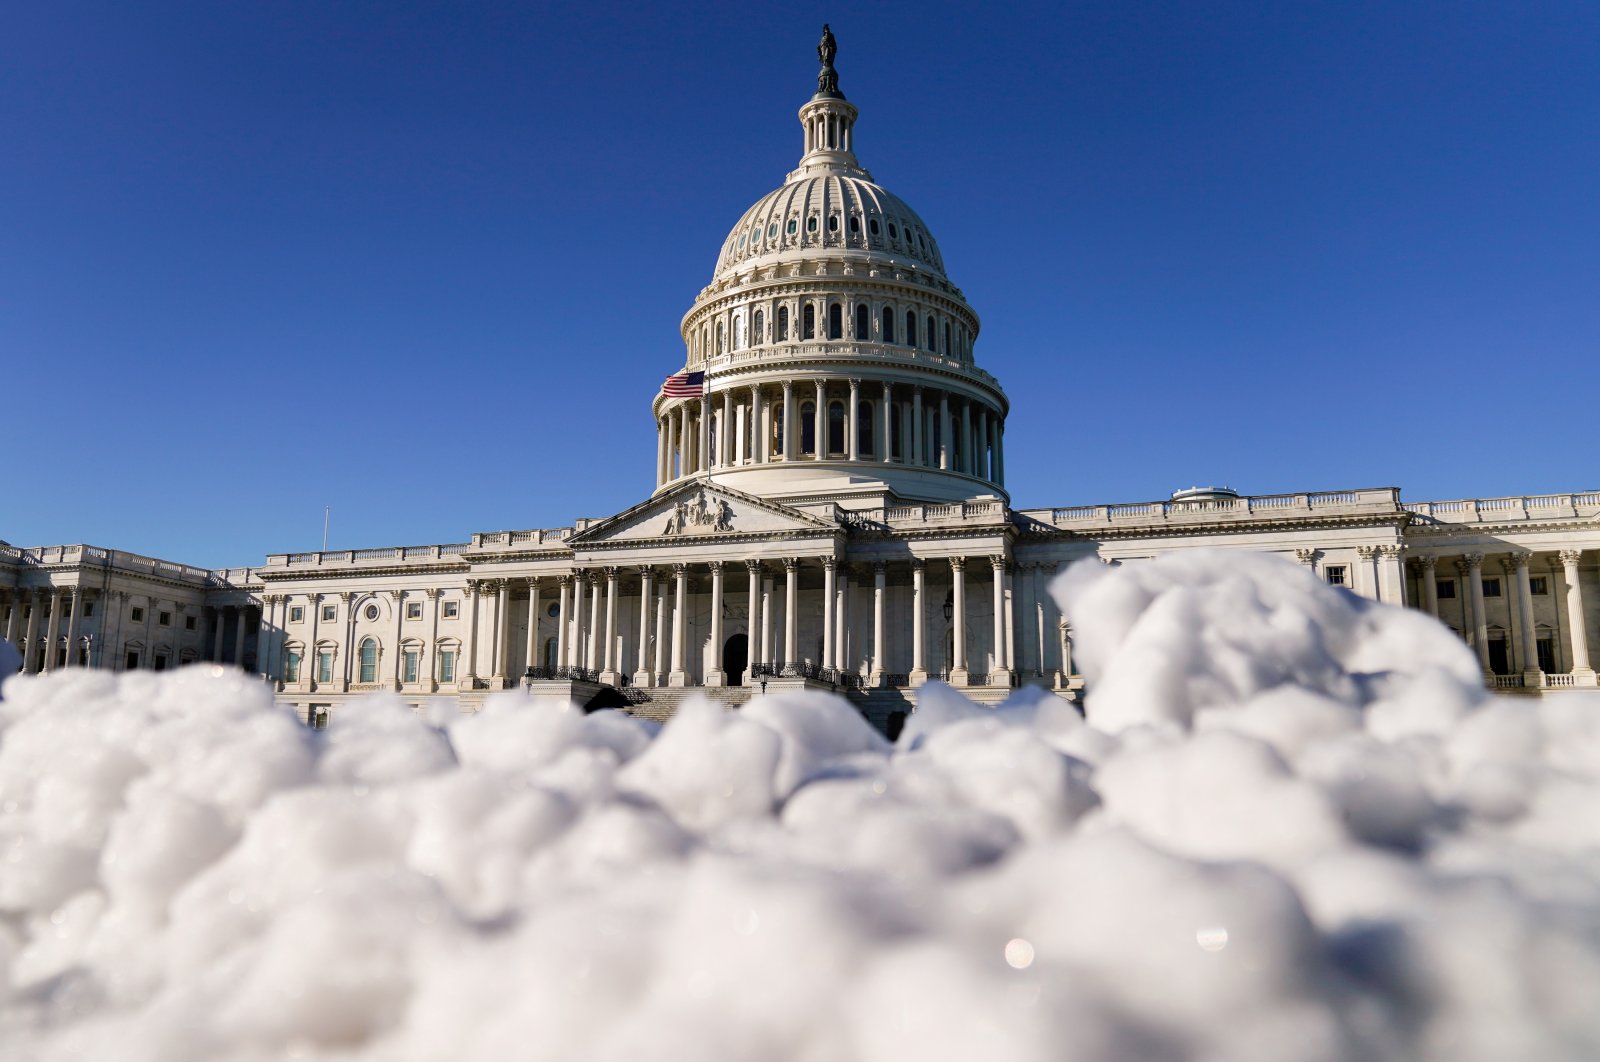 The U.S. Capitol is seen behind melting snow in Washington, D.C., U.S., Dec. 17, 2020. (Reuters Photo)